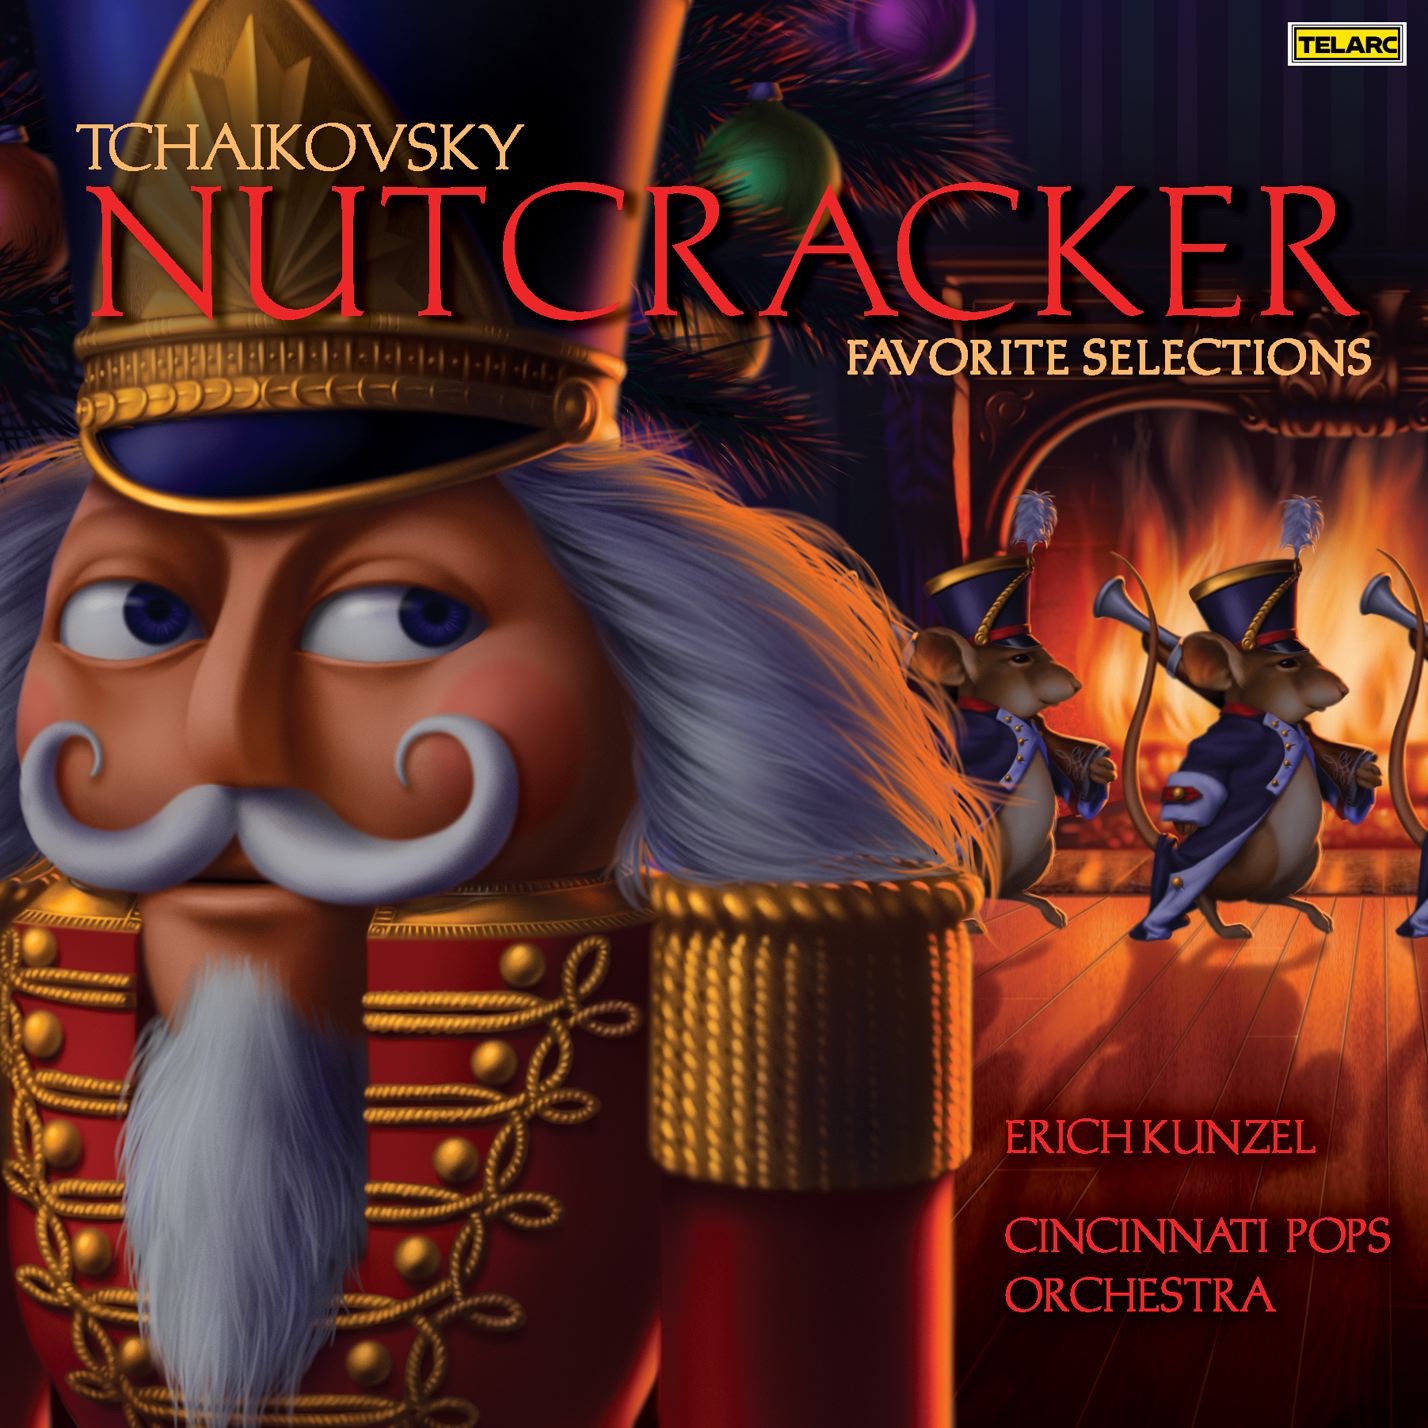 Tchaikovsky: Nutcracker - Selections from the Ballet